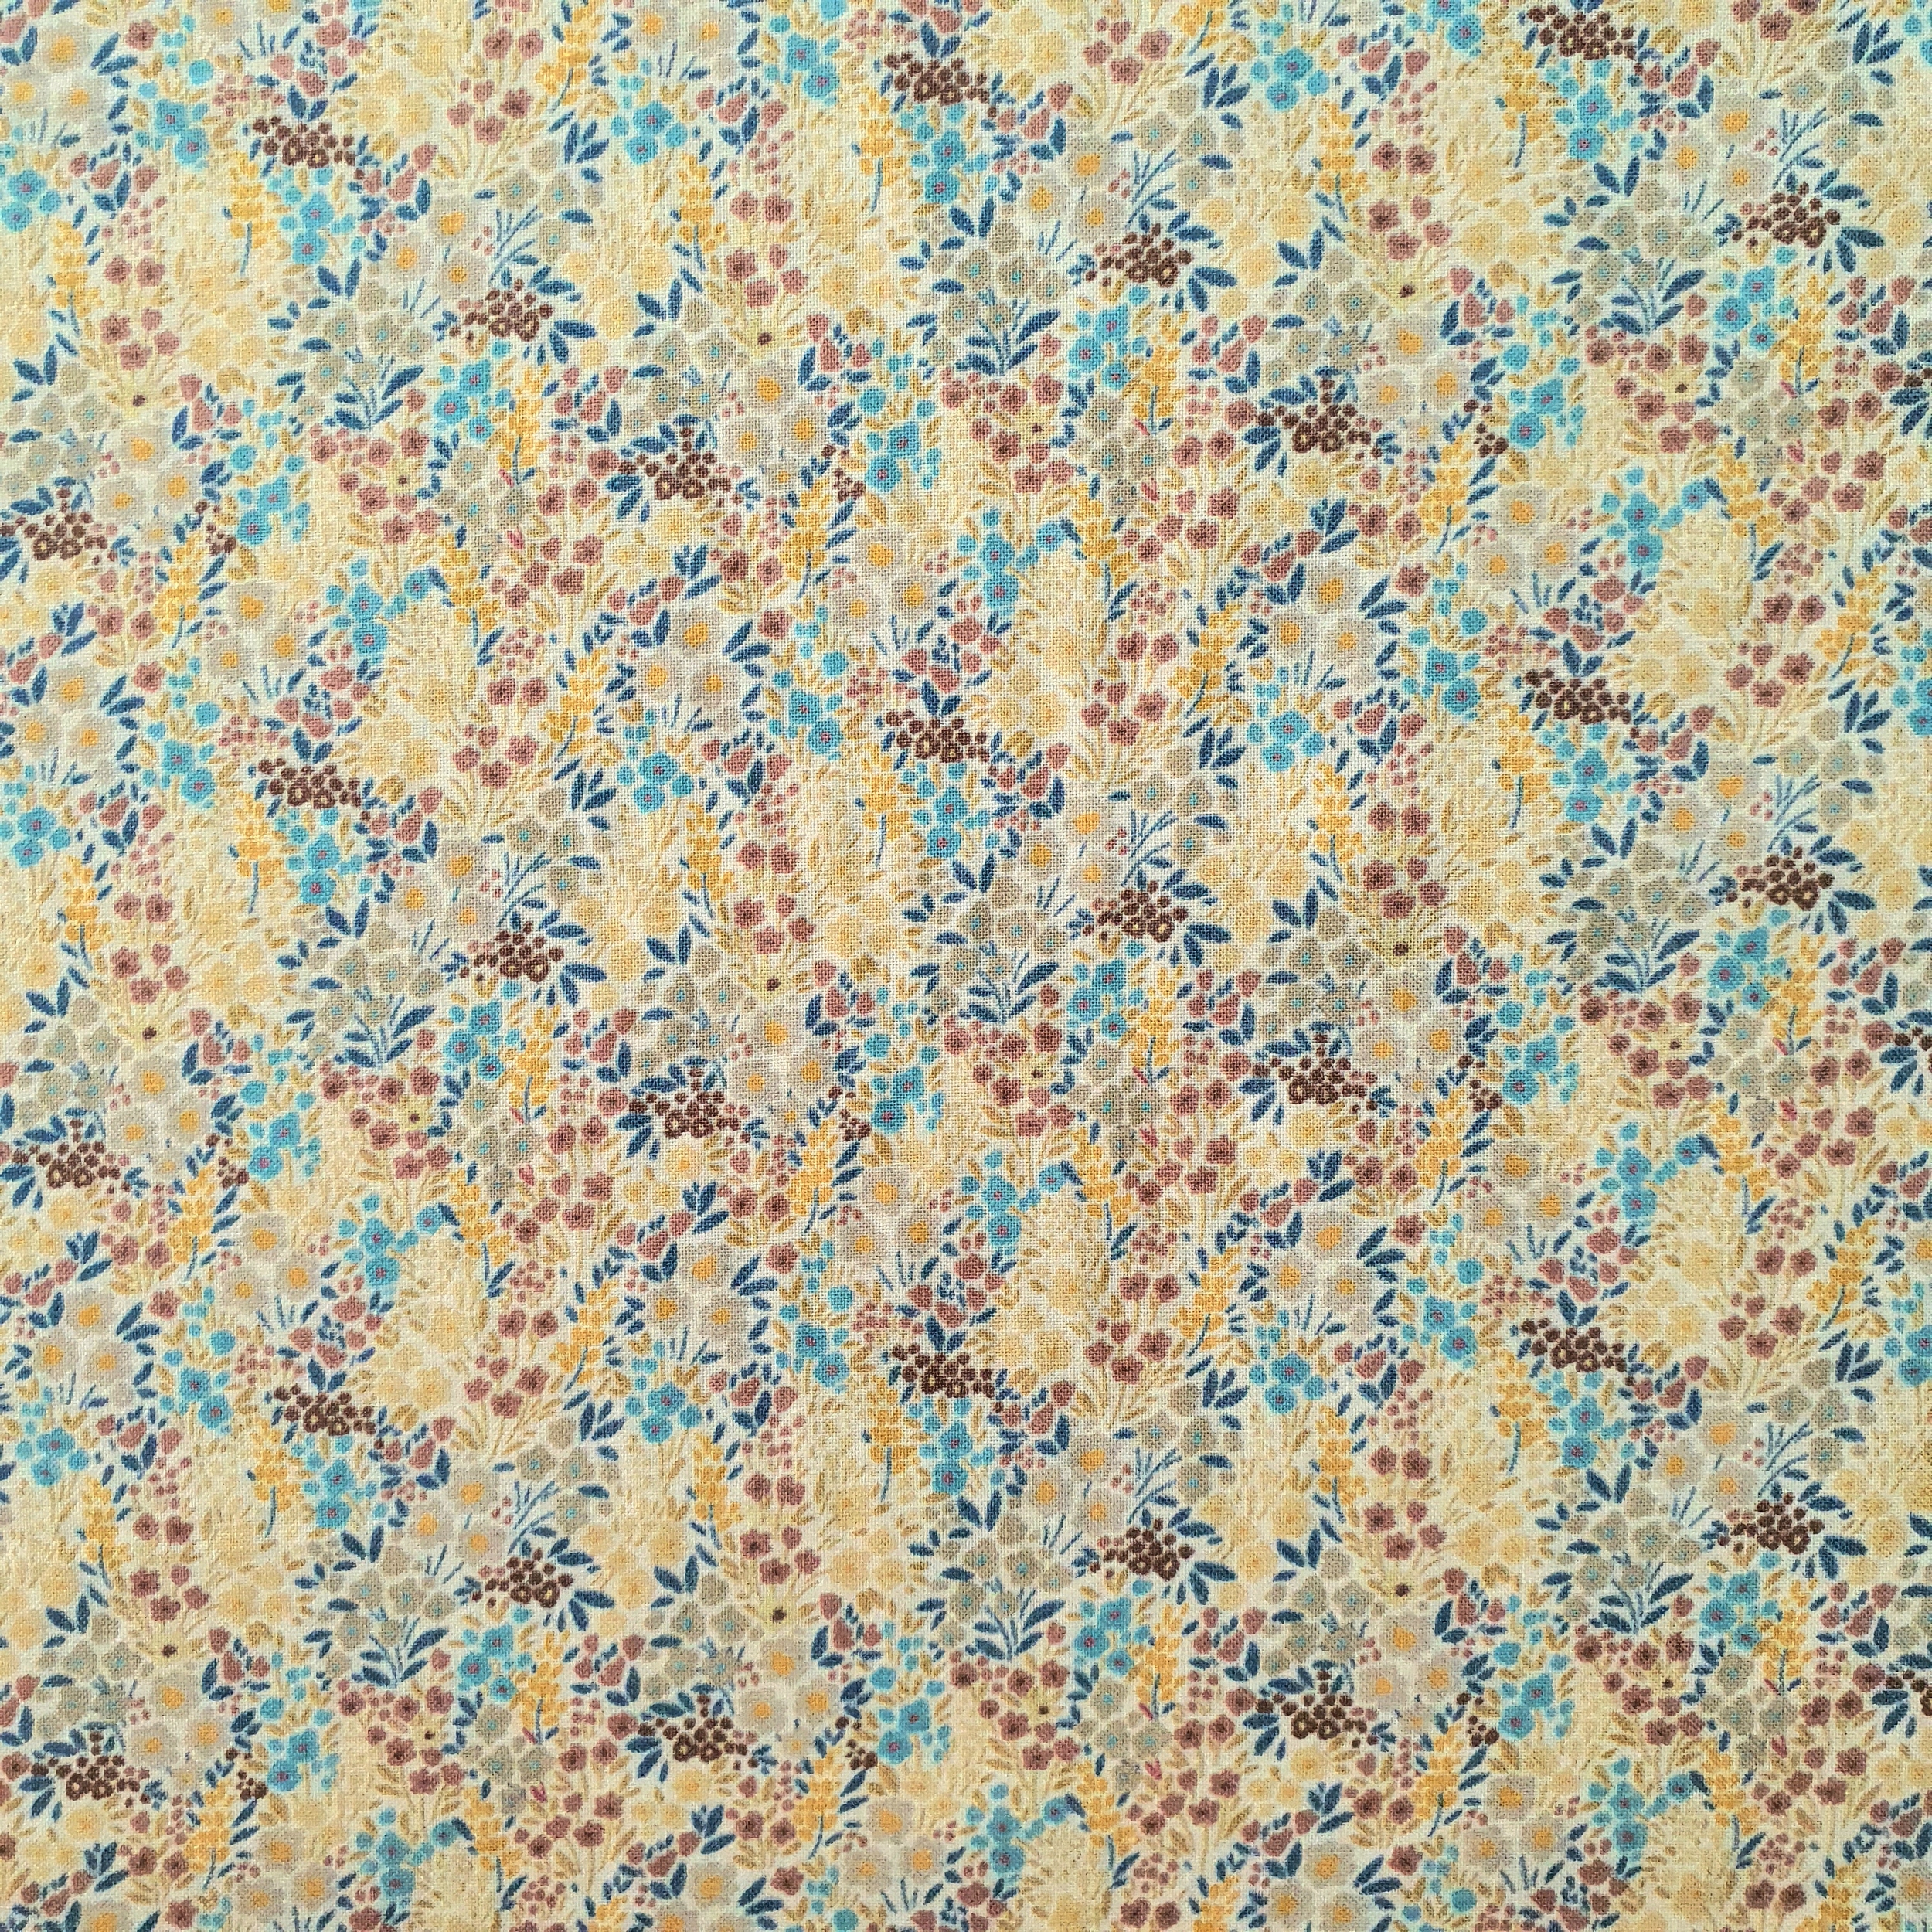 Tissu coton percale petits fleurs fond bleu, beige, marron, jaune (1)